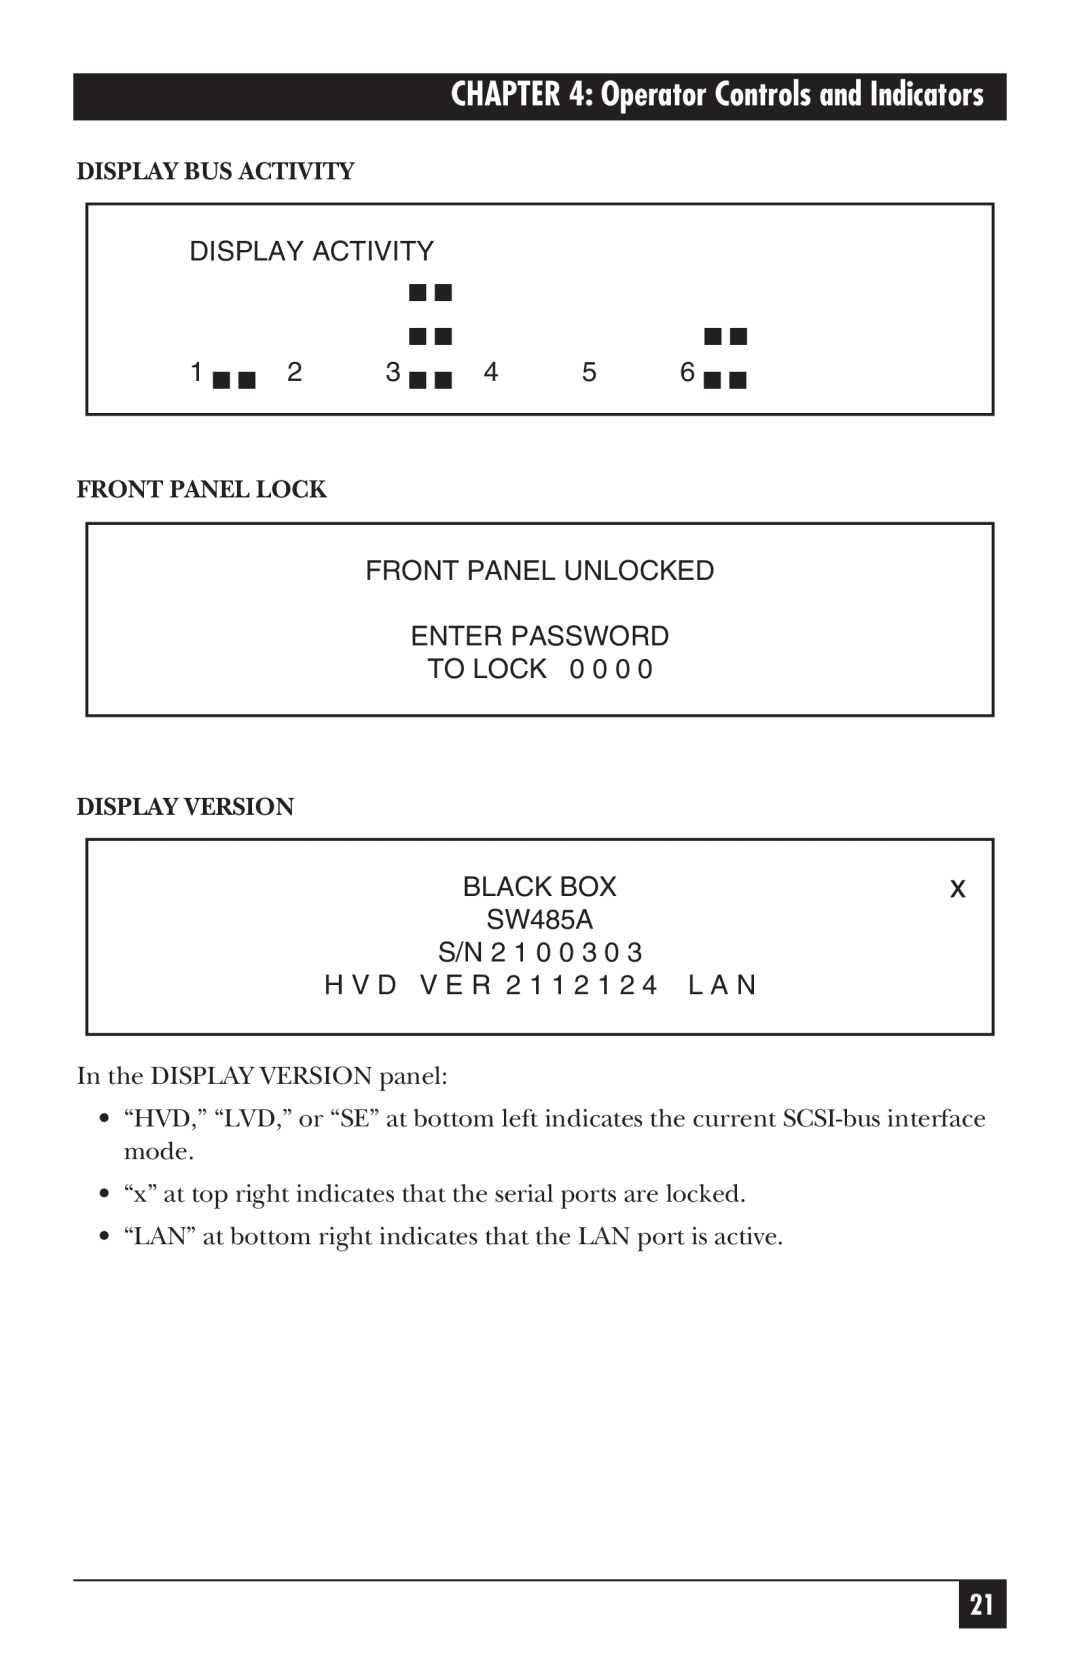 Black Box SW487A-R2 manual Operator Controls and Indicators, Display Bus Activity, Front Panel Lock, Display Version 